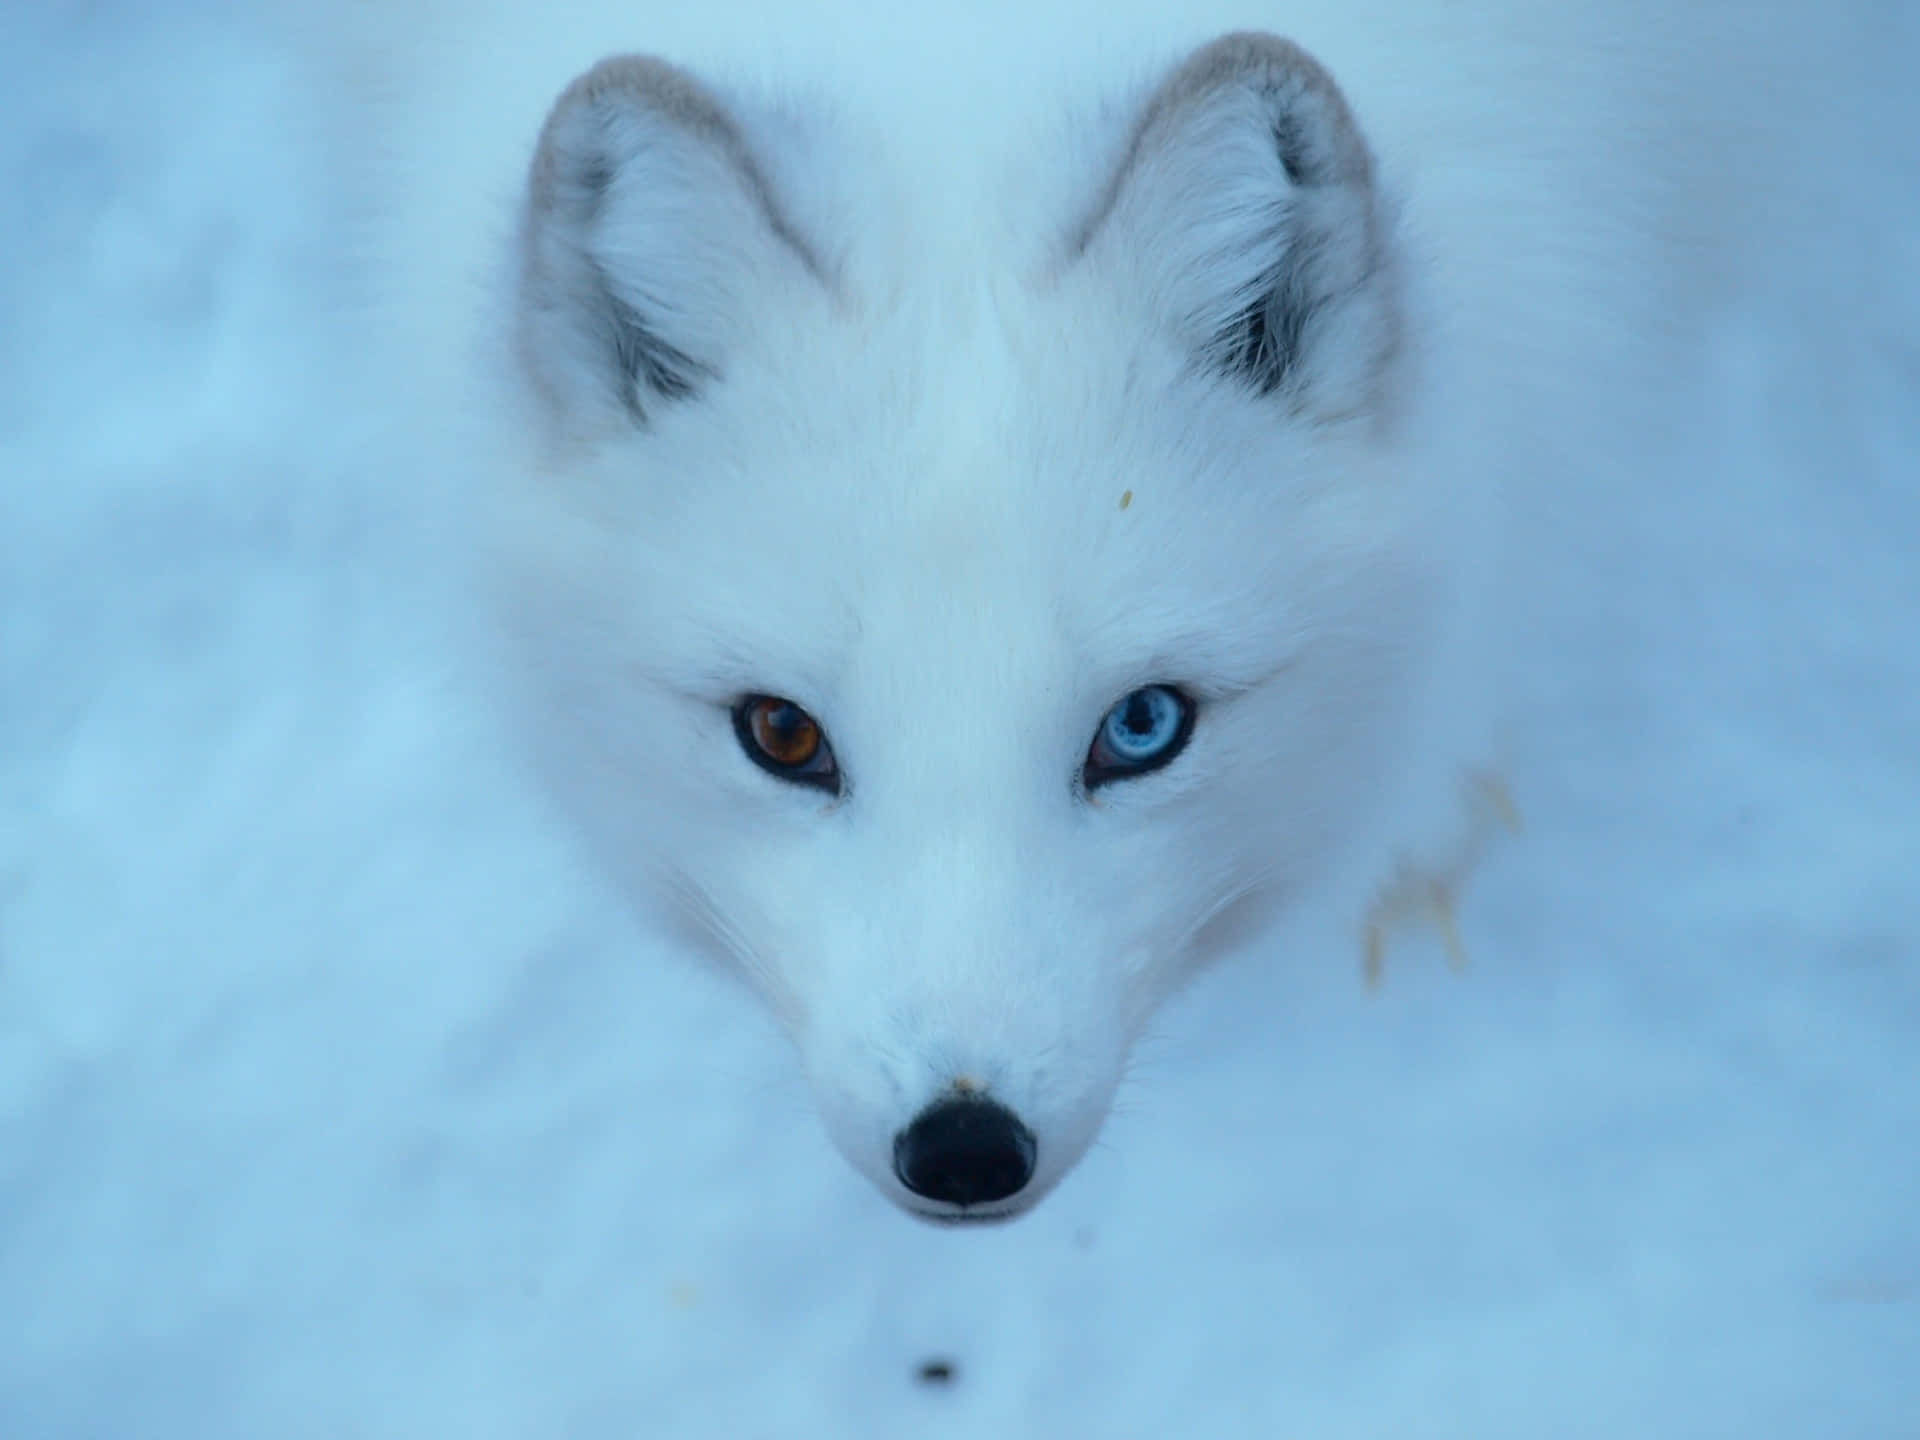 A Closeup of an Arctic Fox in a Snowy Environment.